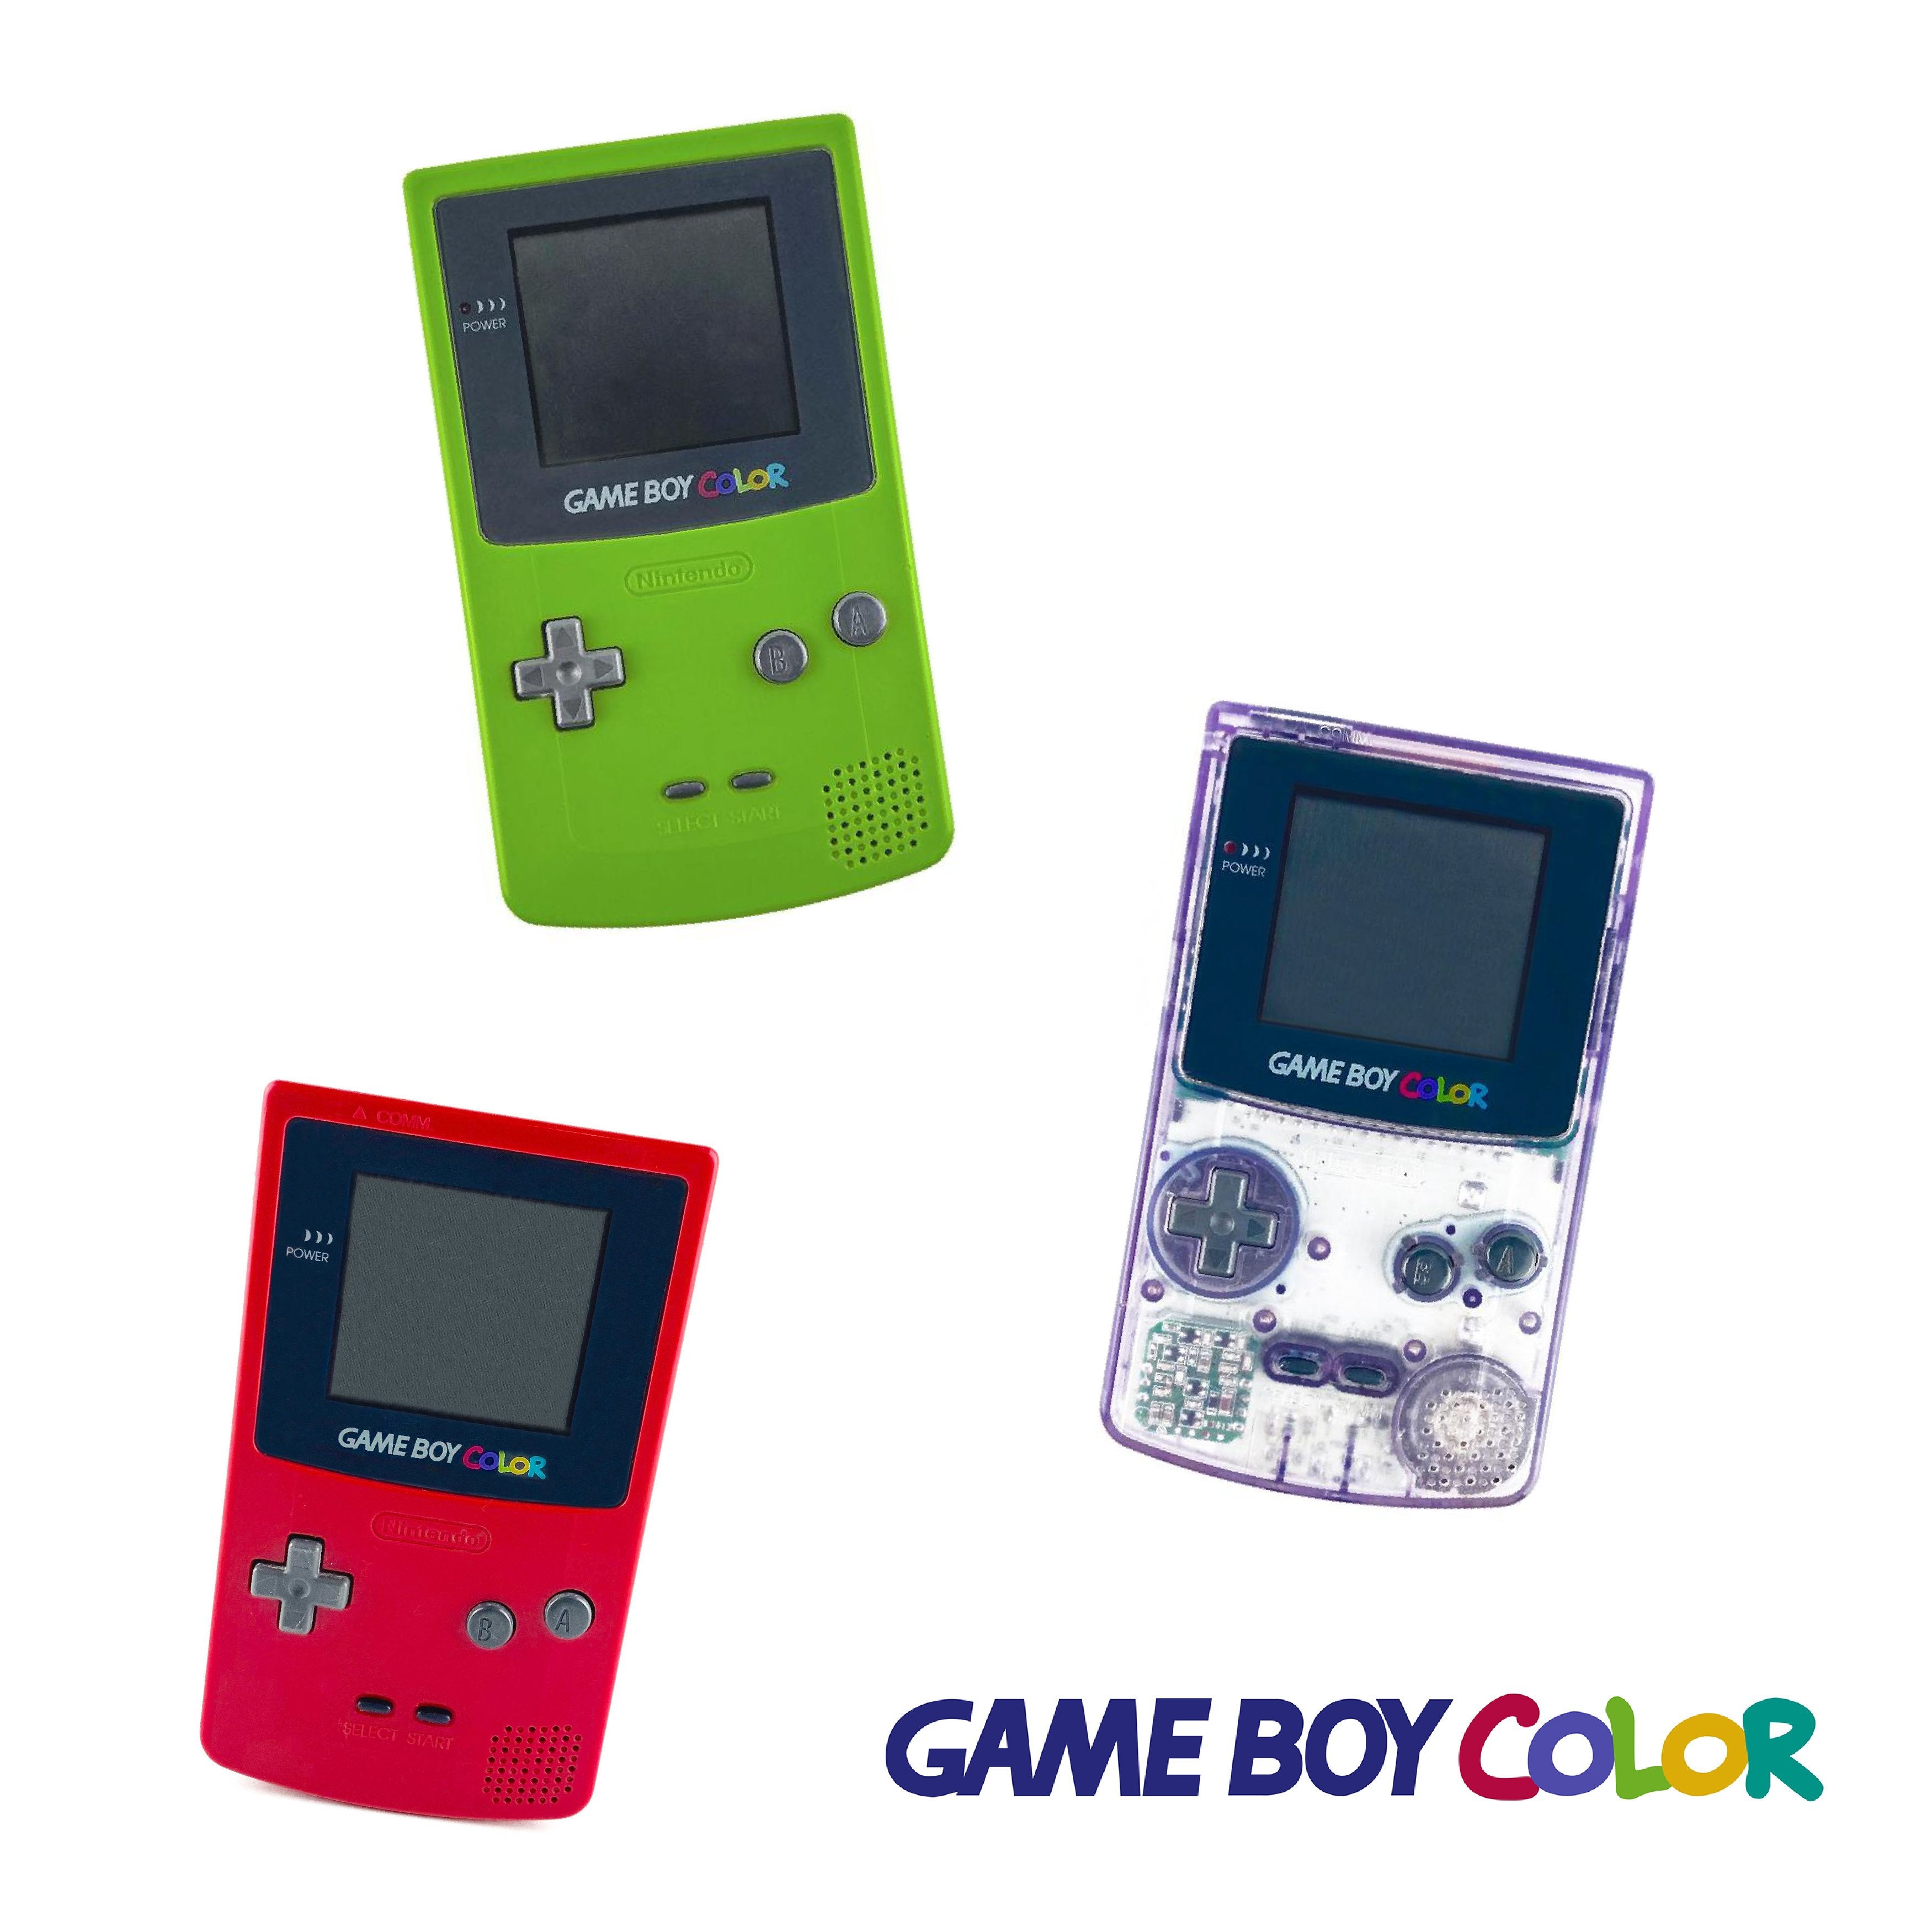 Clear Atomic Purple Game Boy Pocket Prices JP GameBoy